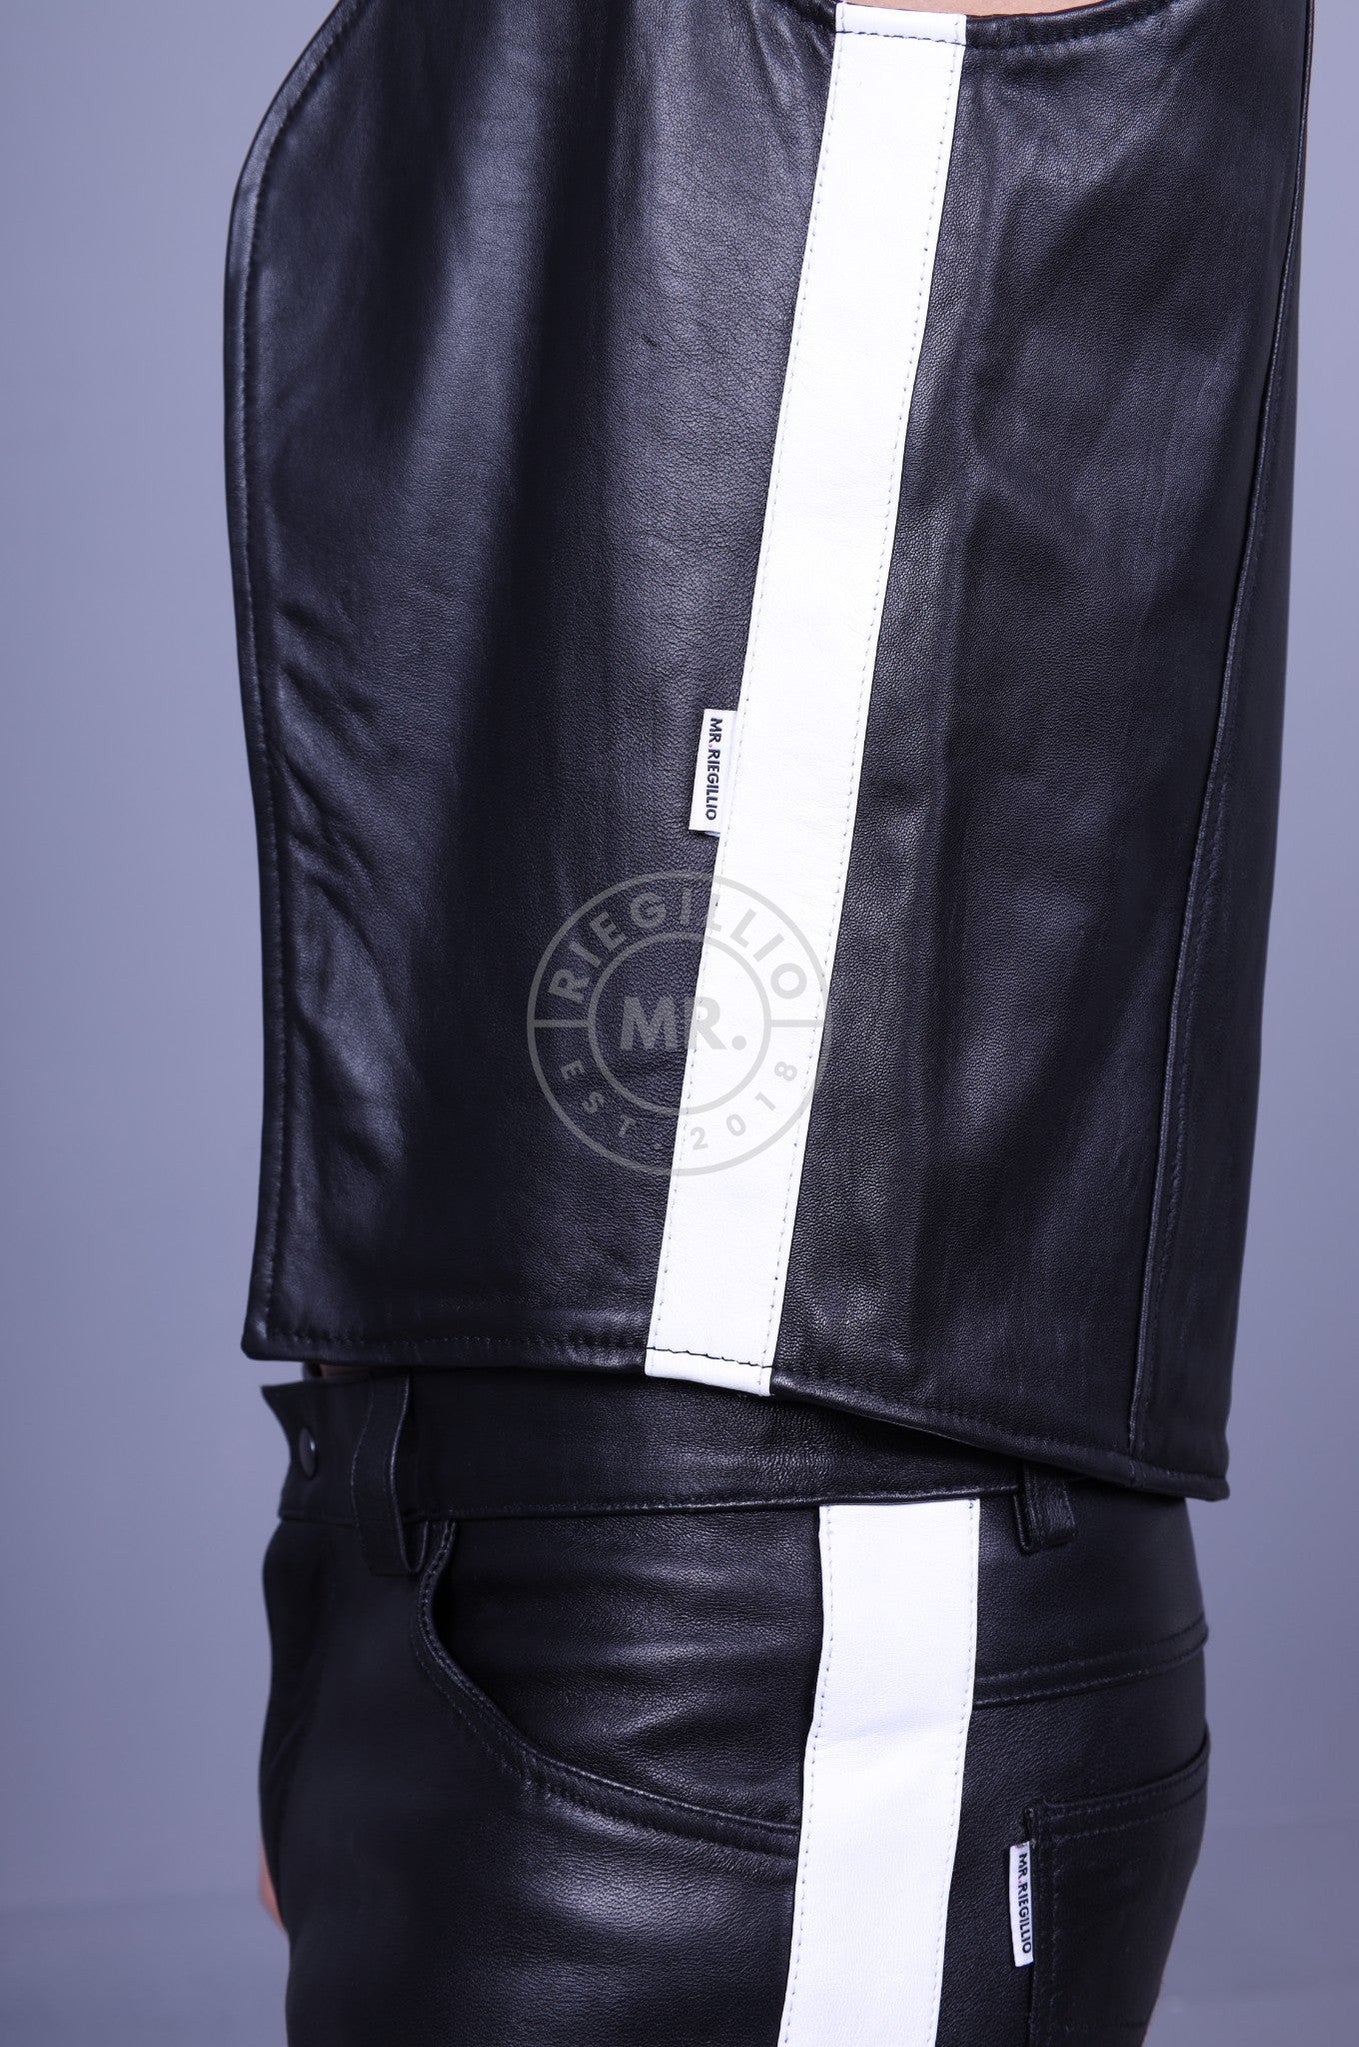 Black Leather Waistcoat - White Stripe at MR. Riegillio